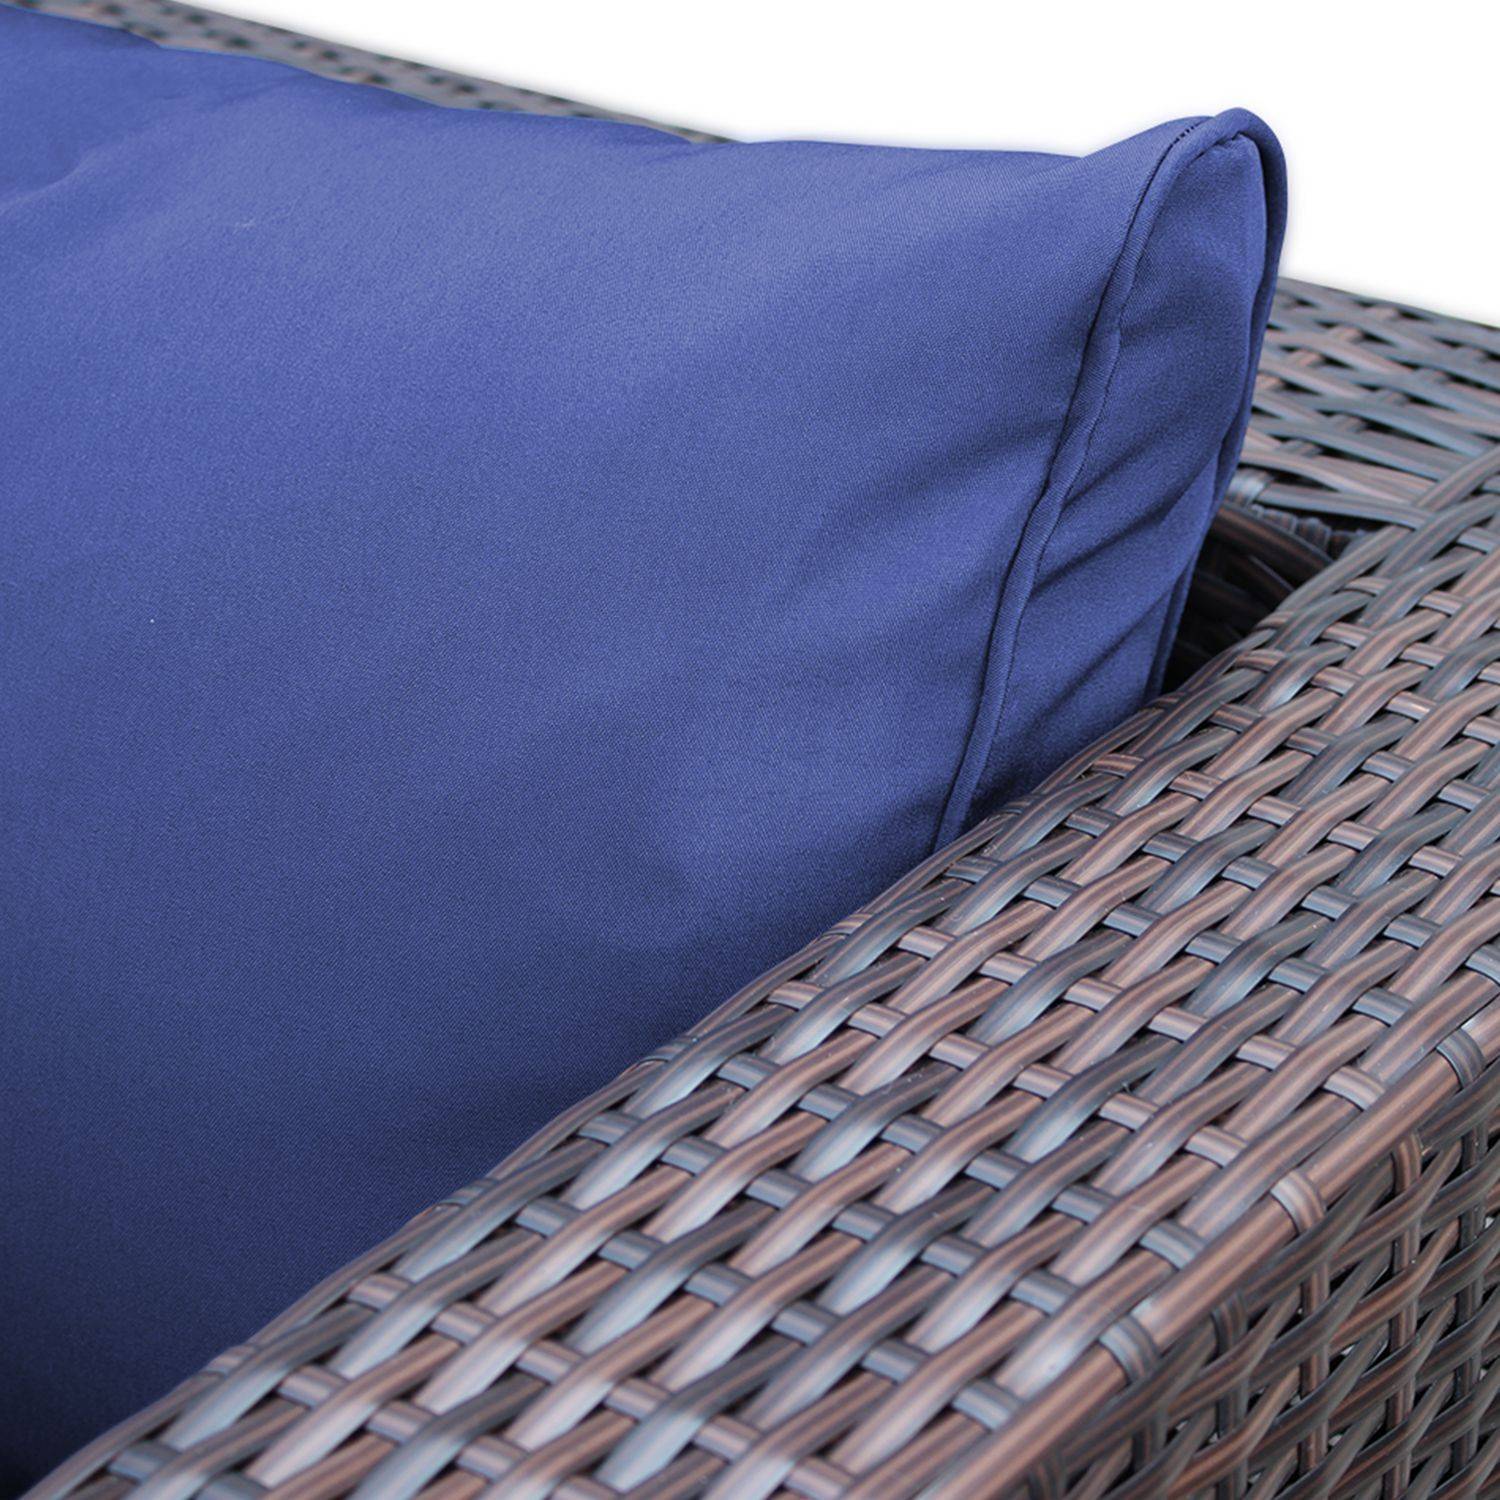 Blue cushion cover set for Napoli garden set - complete set Photo8